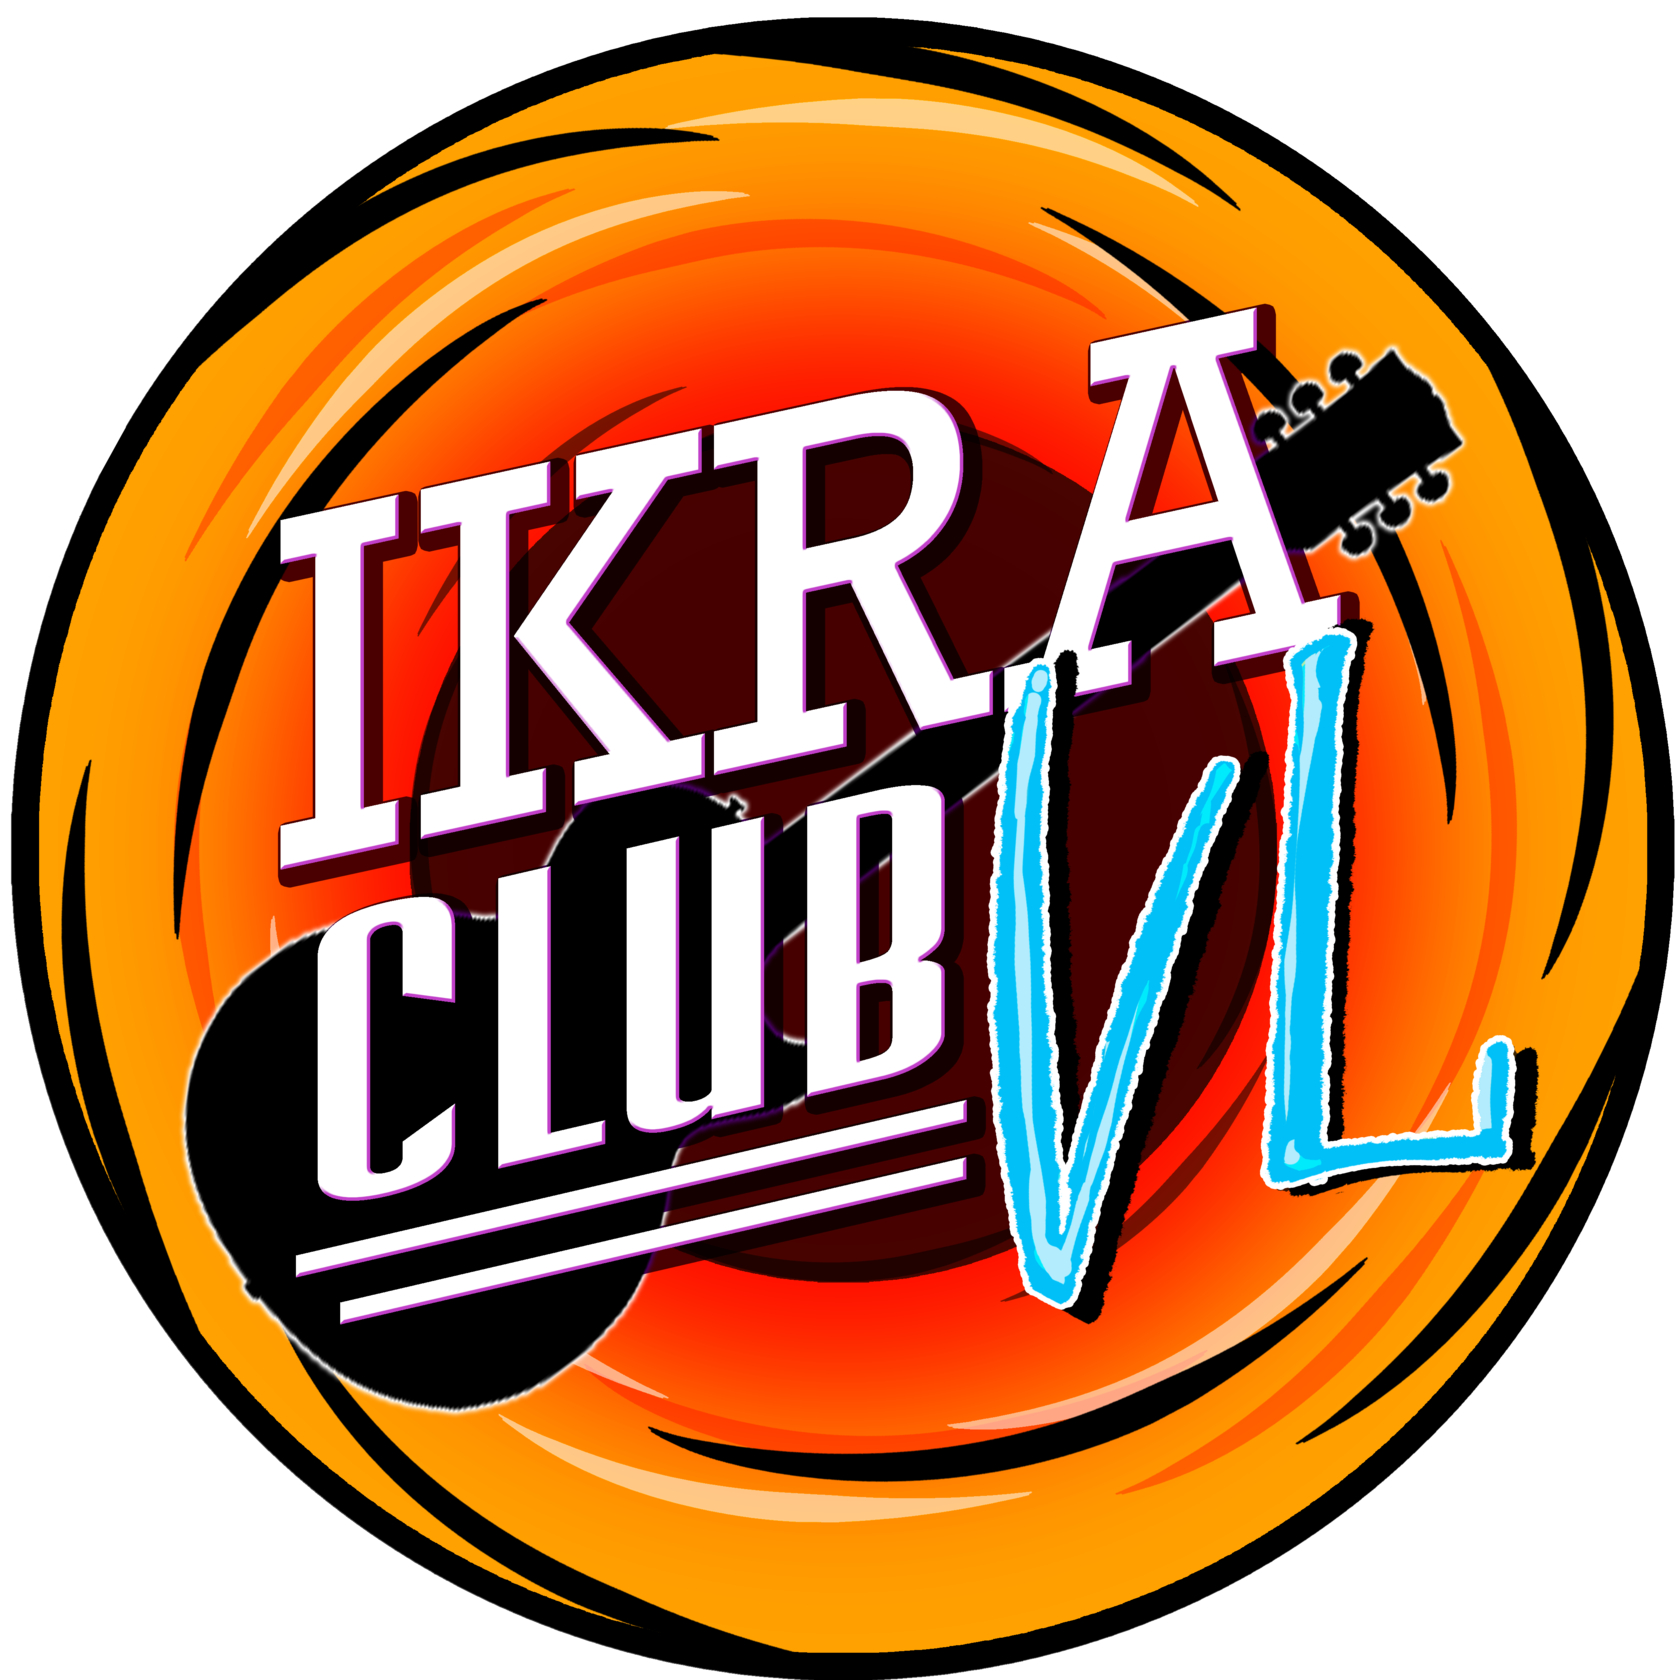 IKRA CLUB